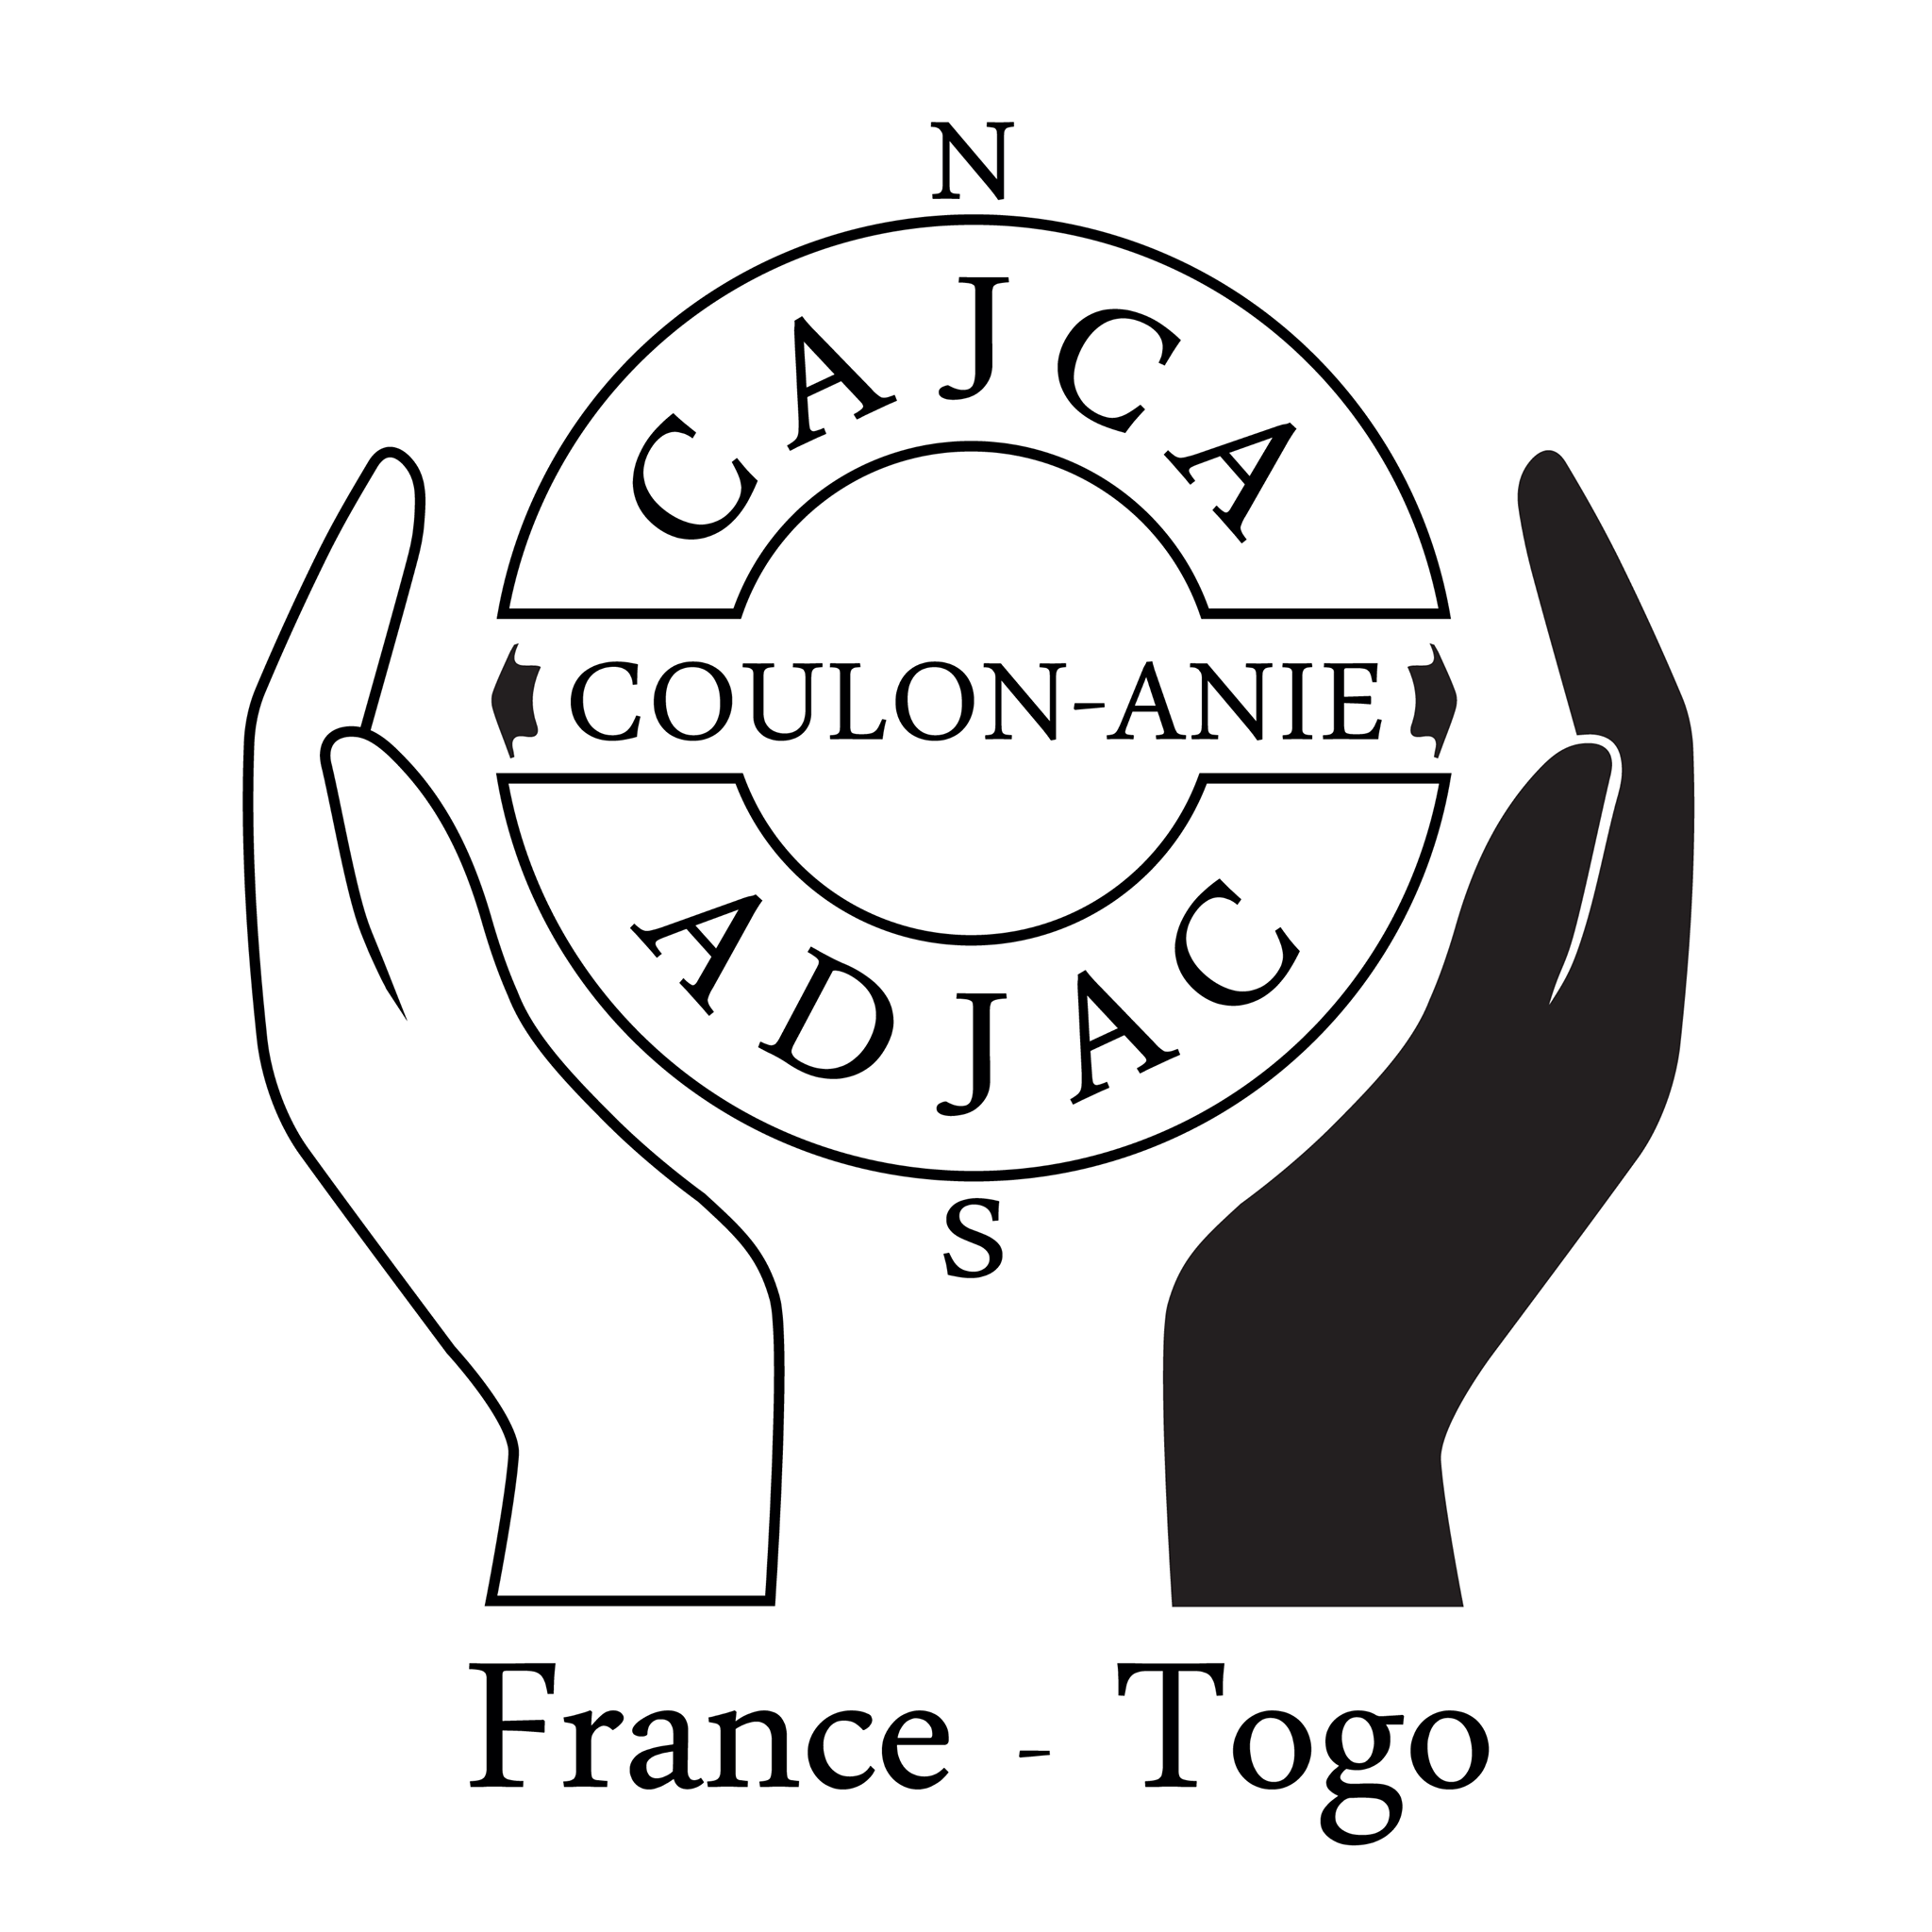 CAJCA - Jumelage Coulon - Anié (Togo)